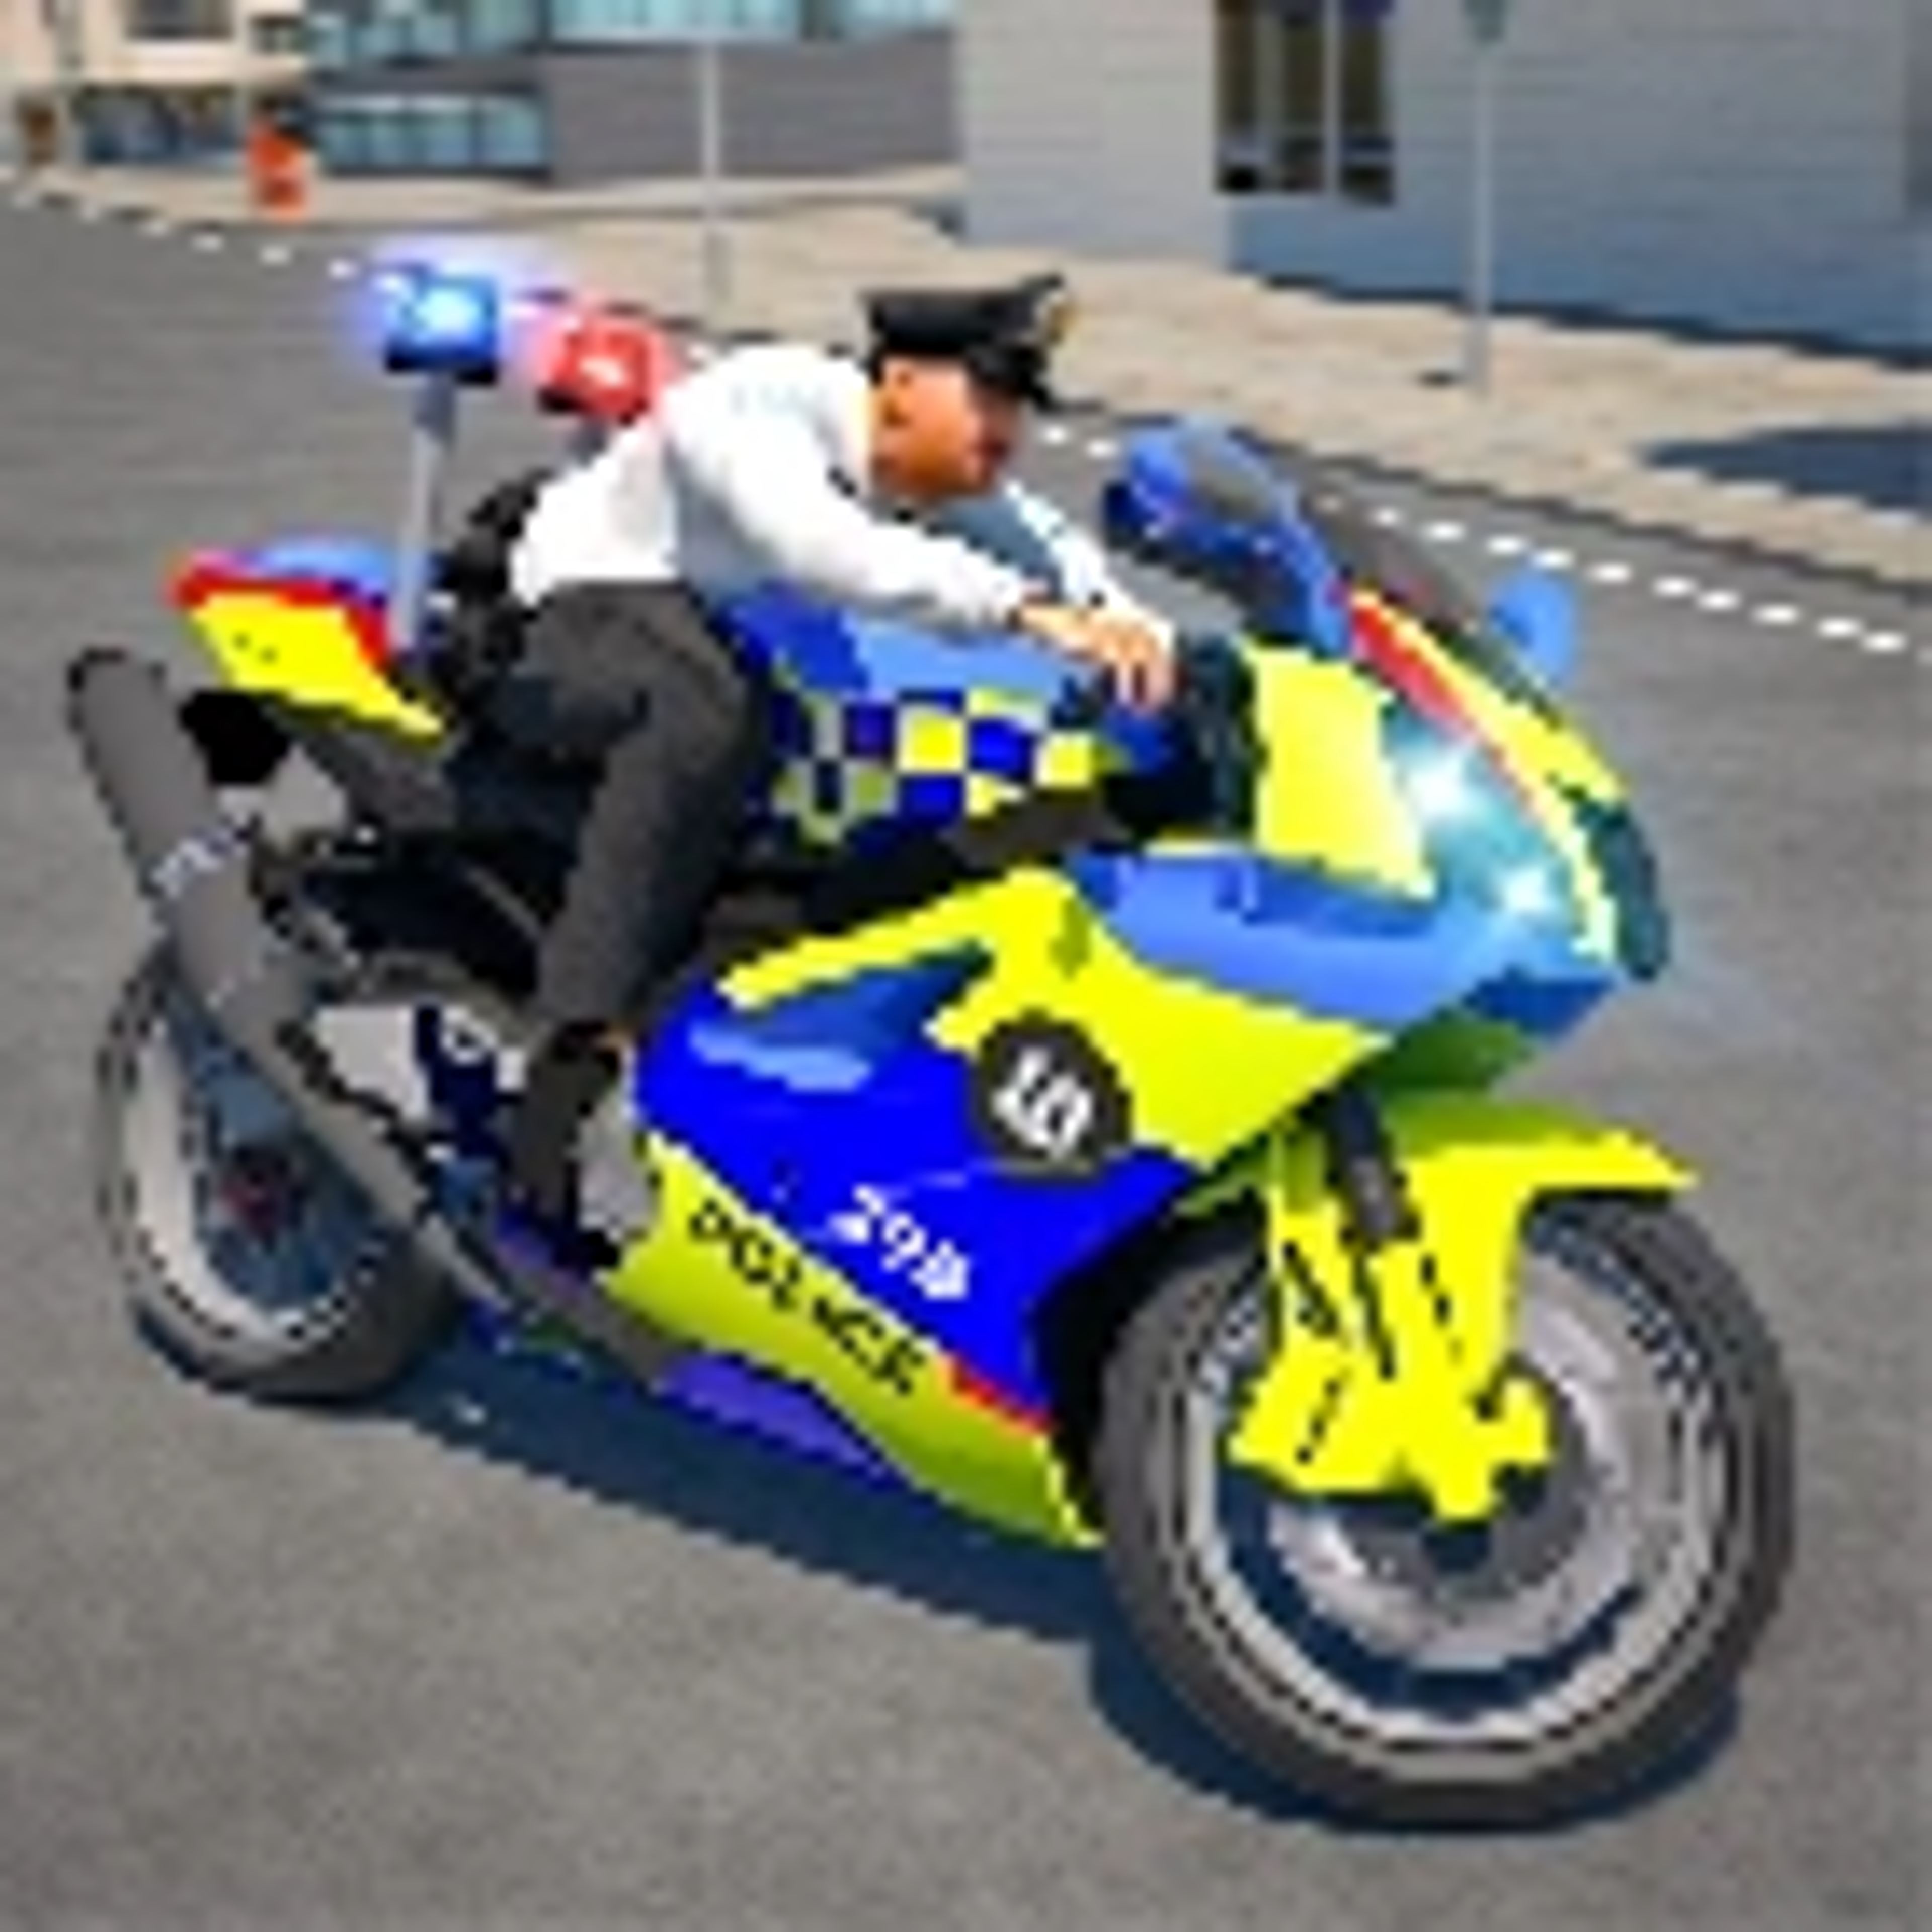 Police Bike Stunt Race Game